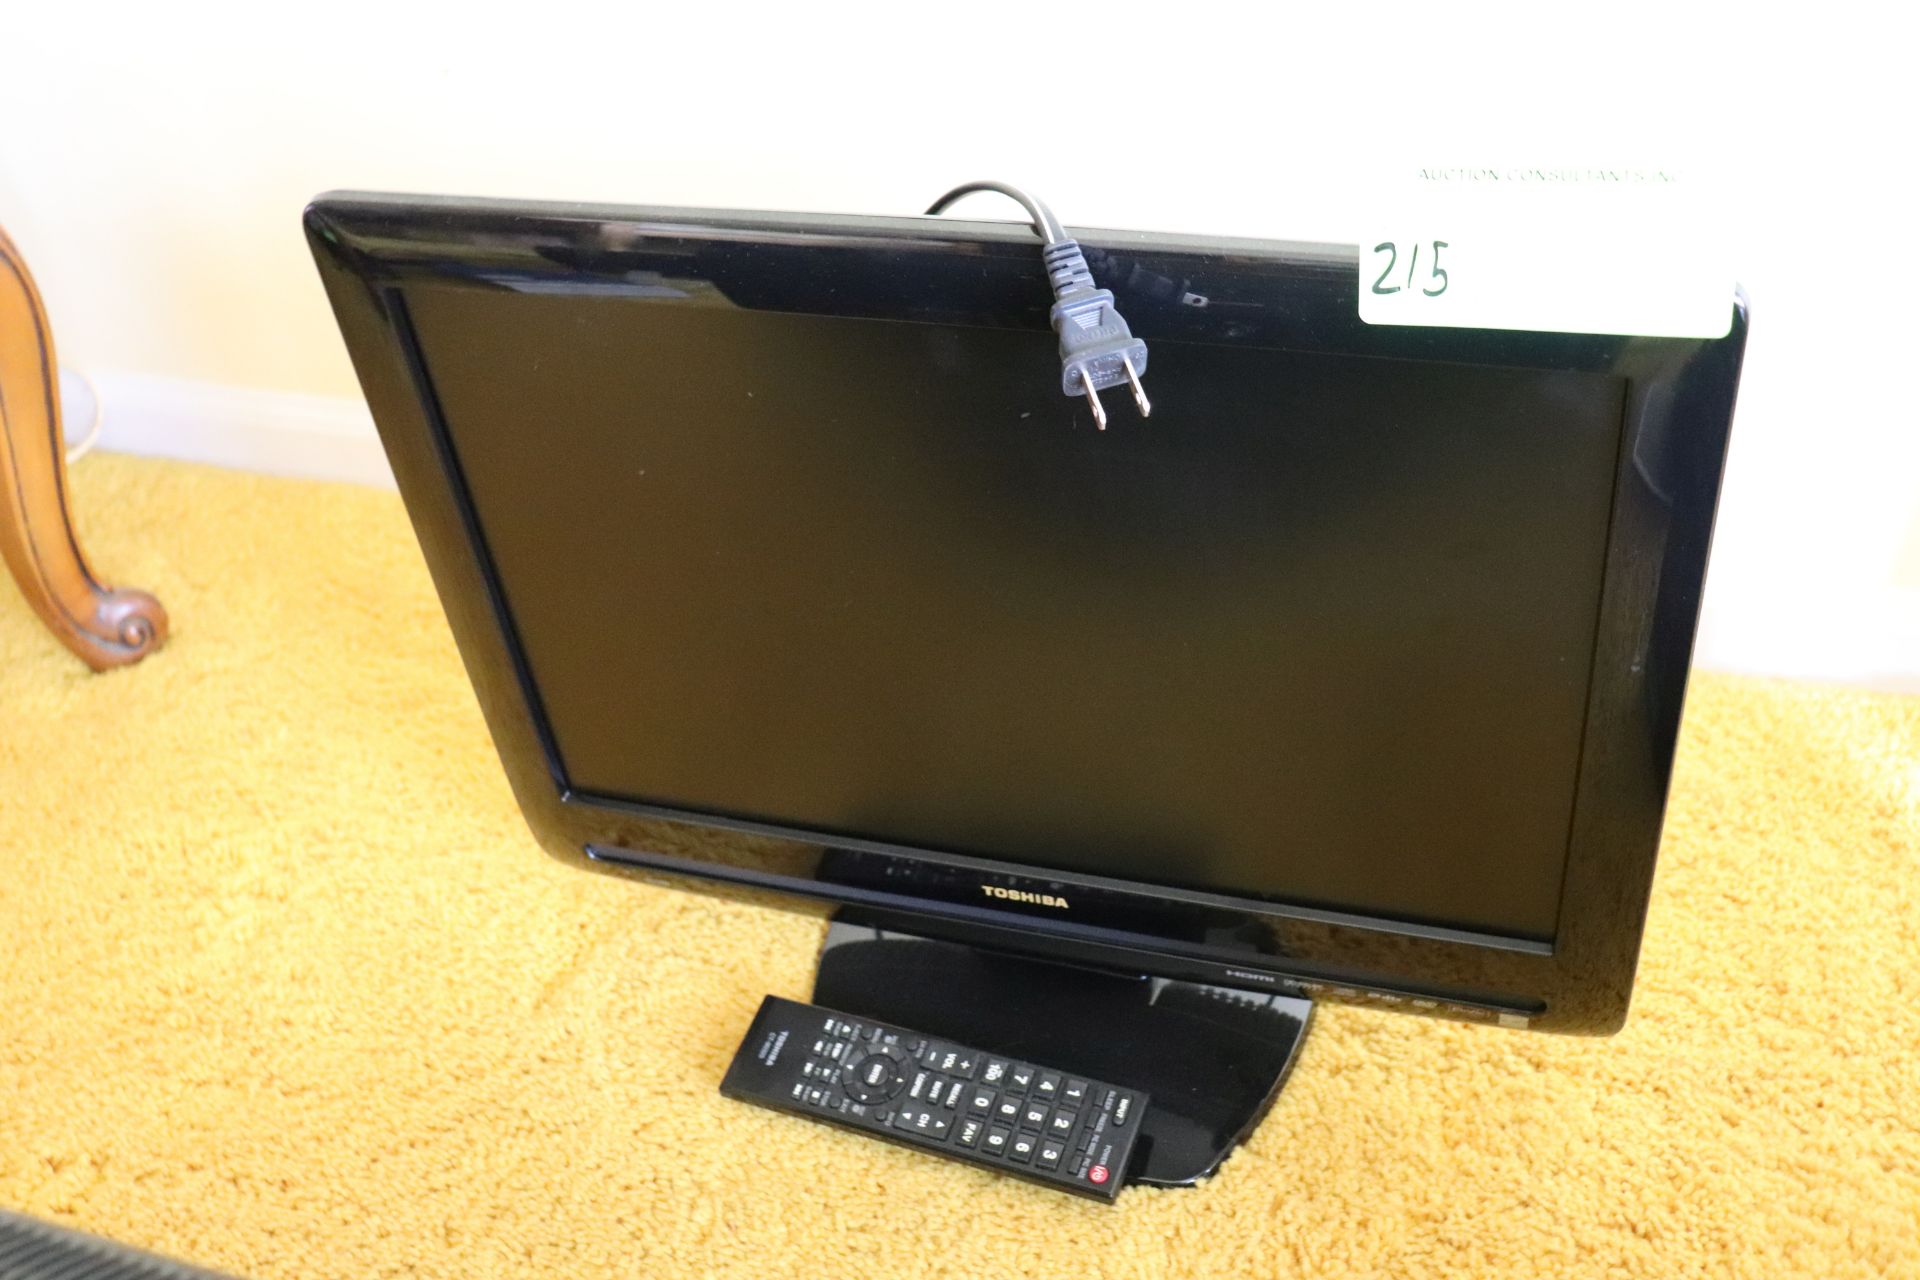 Toshiba 19" television, model 19LV505